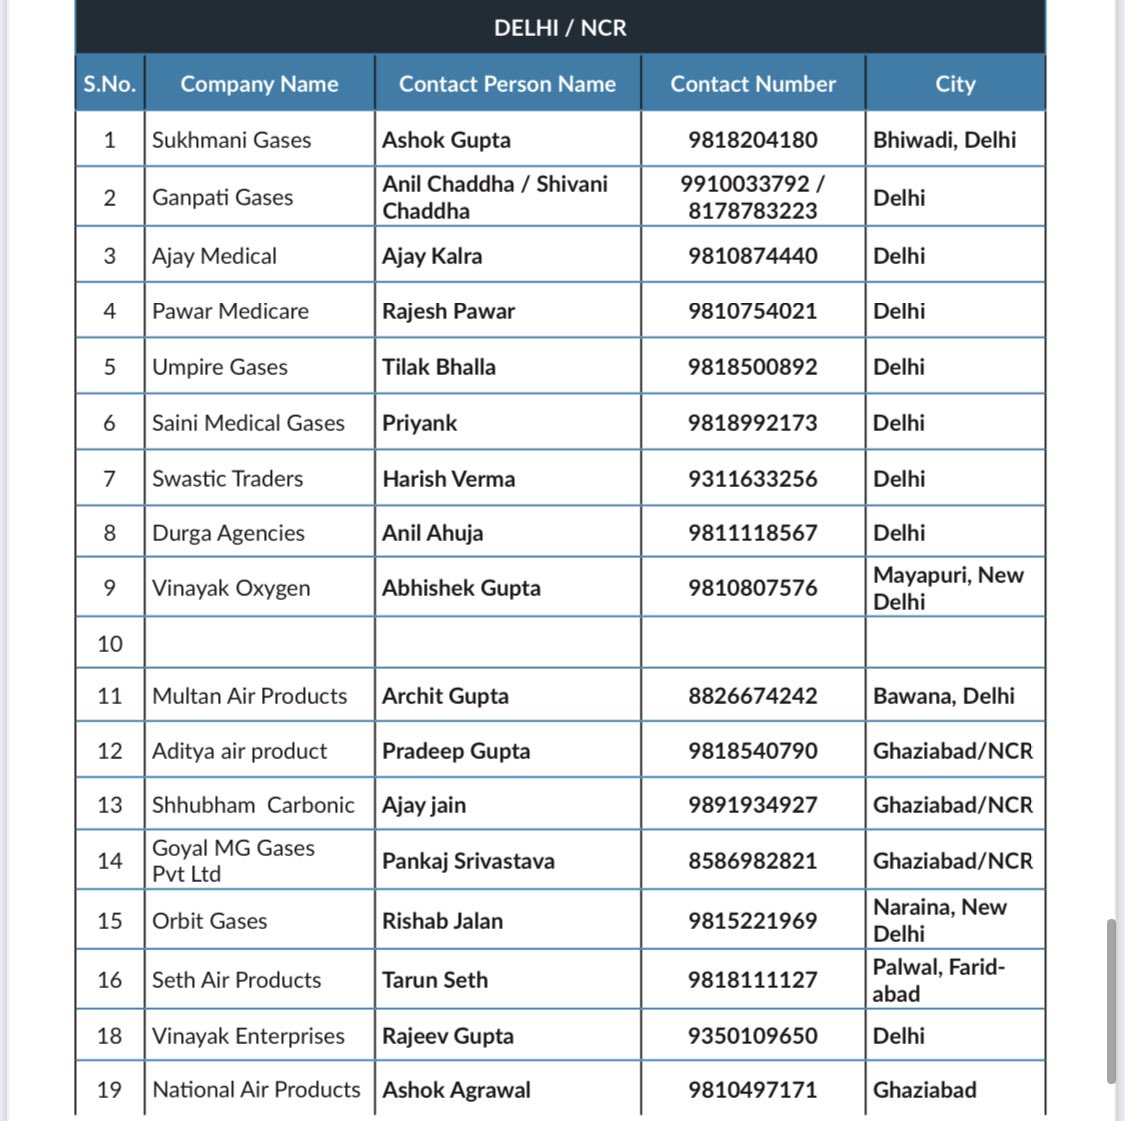 List of Medical Oxygen Gas Suppliers for Home Use (Delhi NCR)
Share more and more
@is_enticing @amritabhinder @iRadhikaGupta @InxMeme 
@KapilMishra_IND @TajinderBagga  @sssingh21